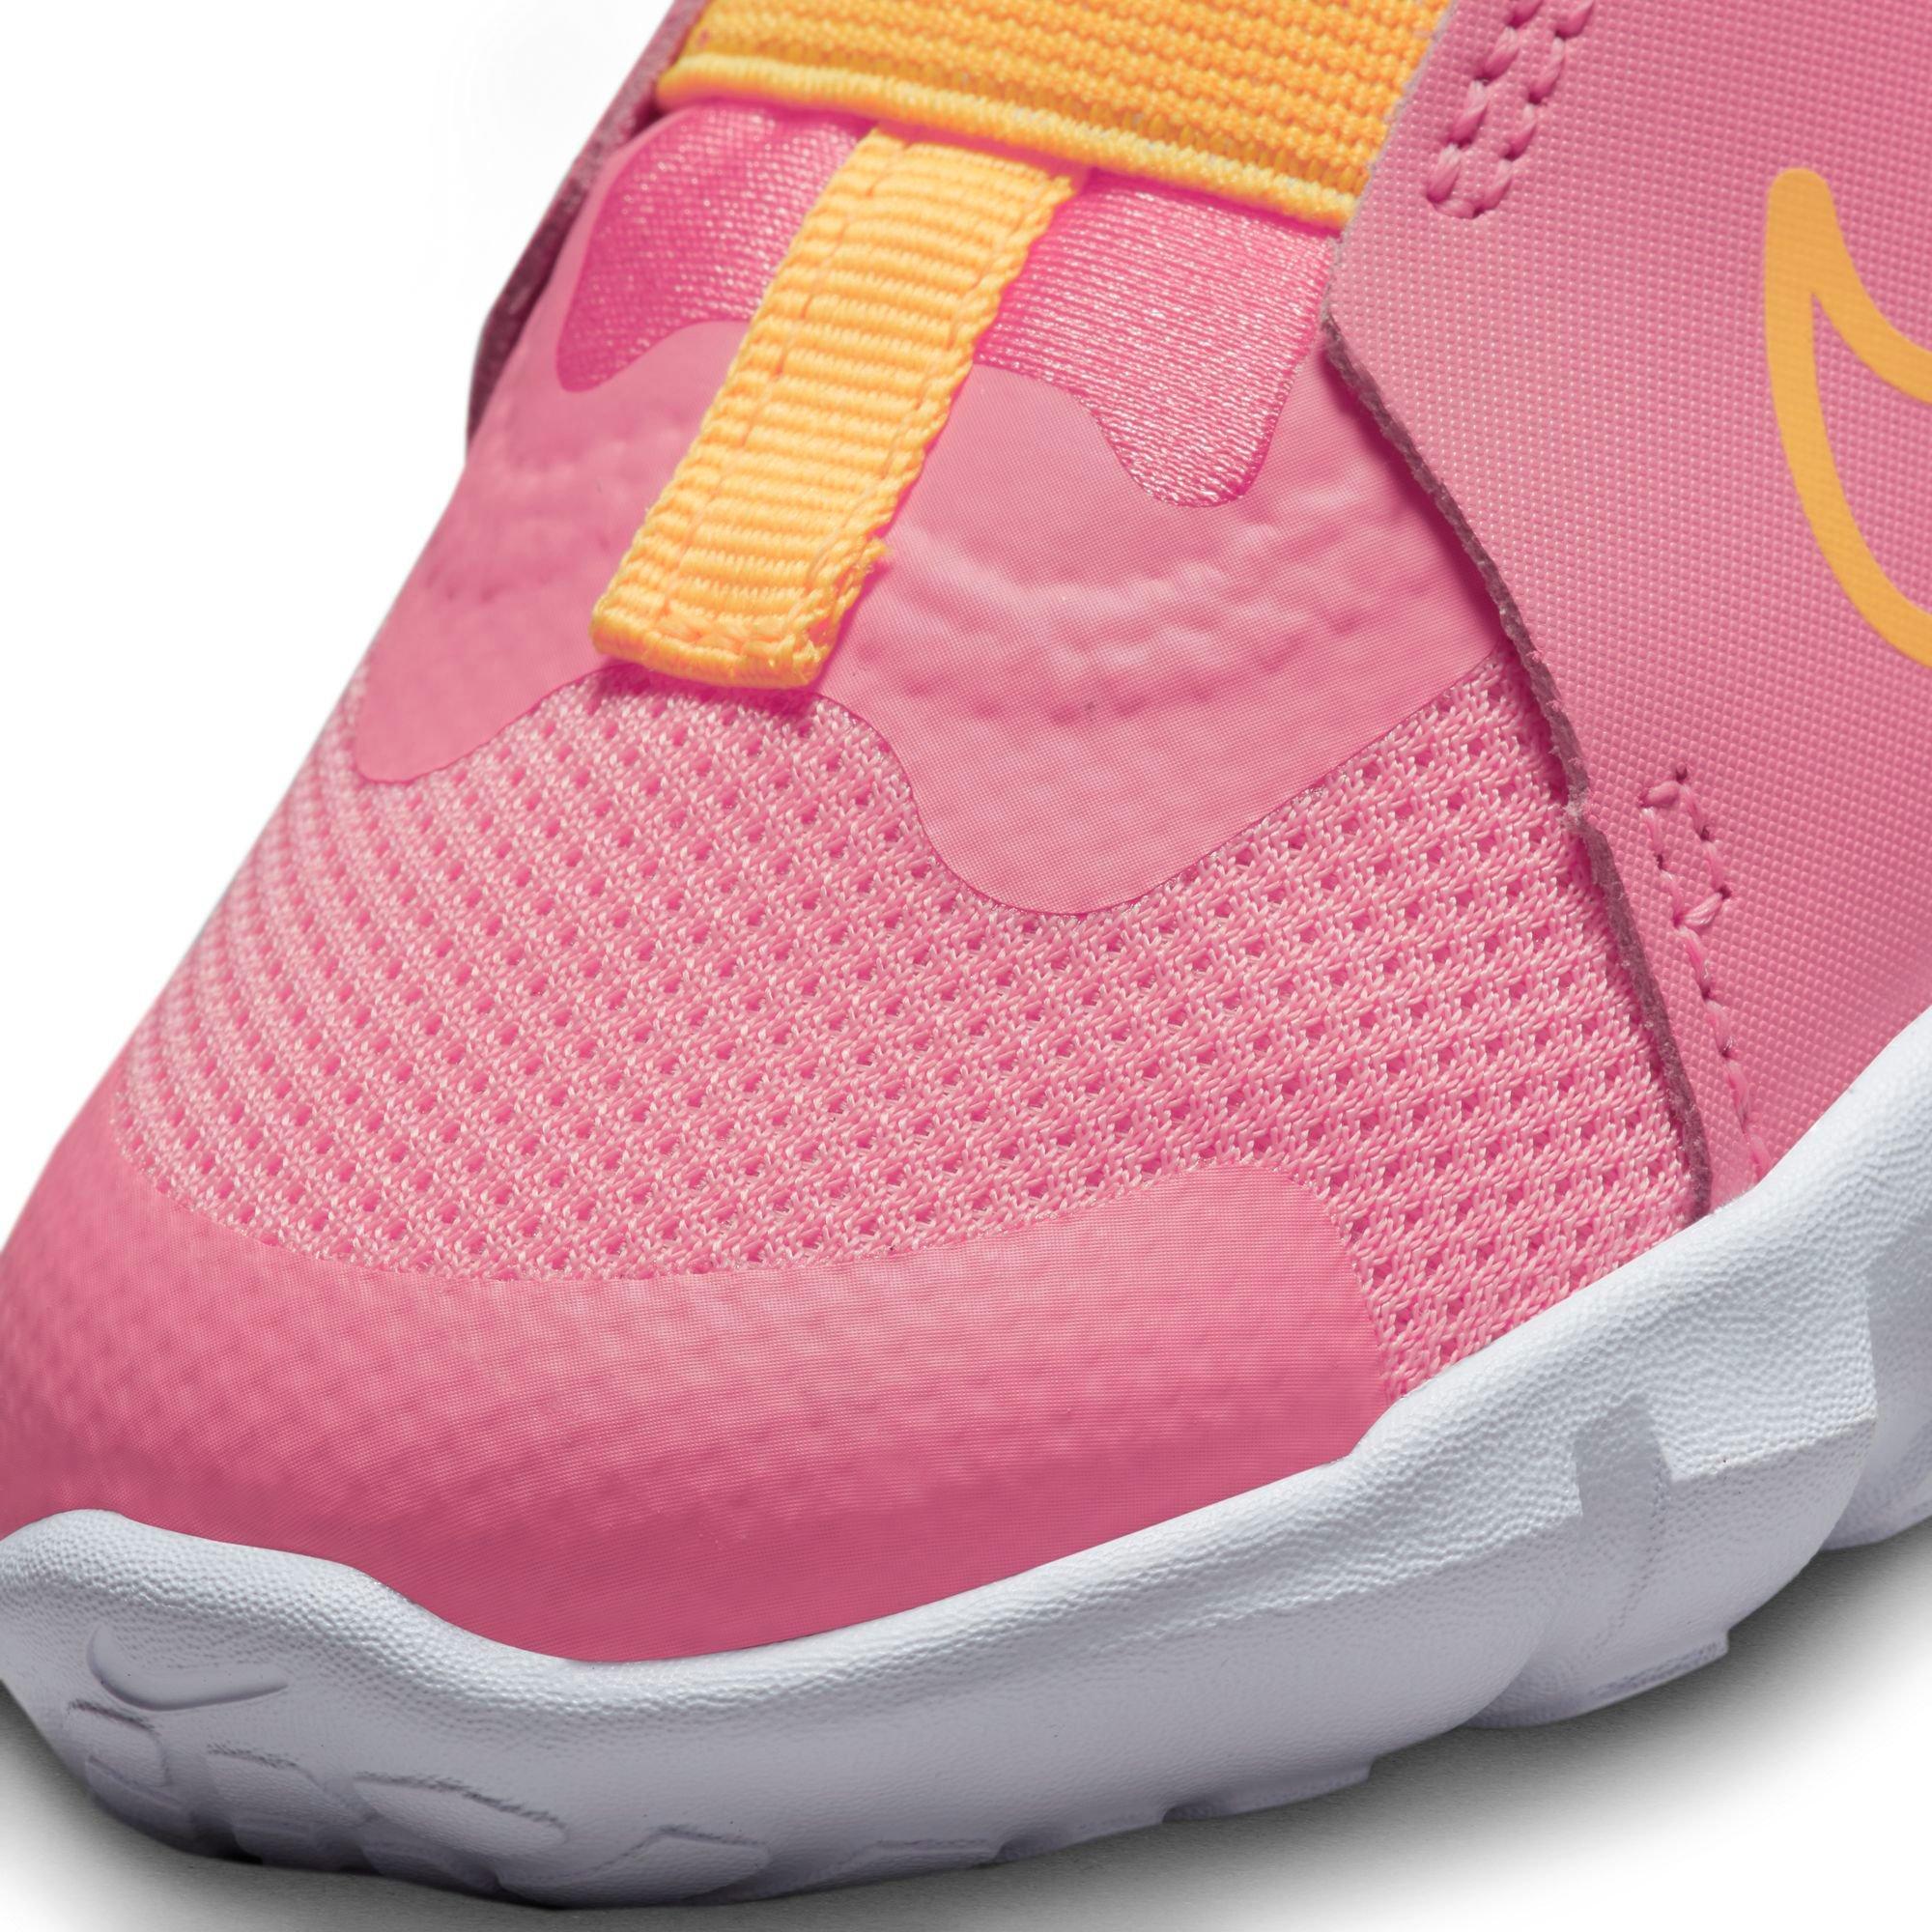 Flex Runner "Coral Chalk/Citron Coral-White" Toddler Girls' Running Shoe